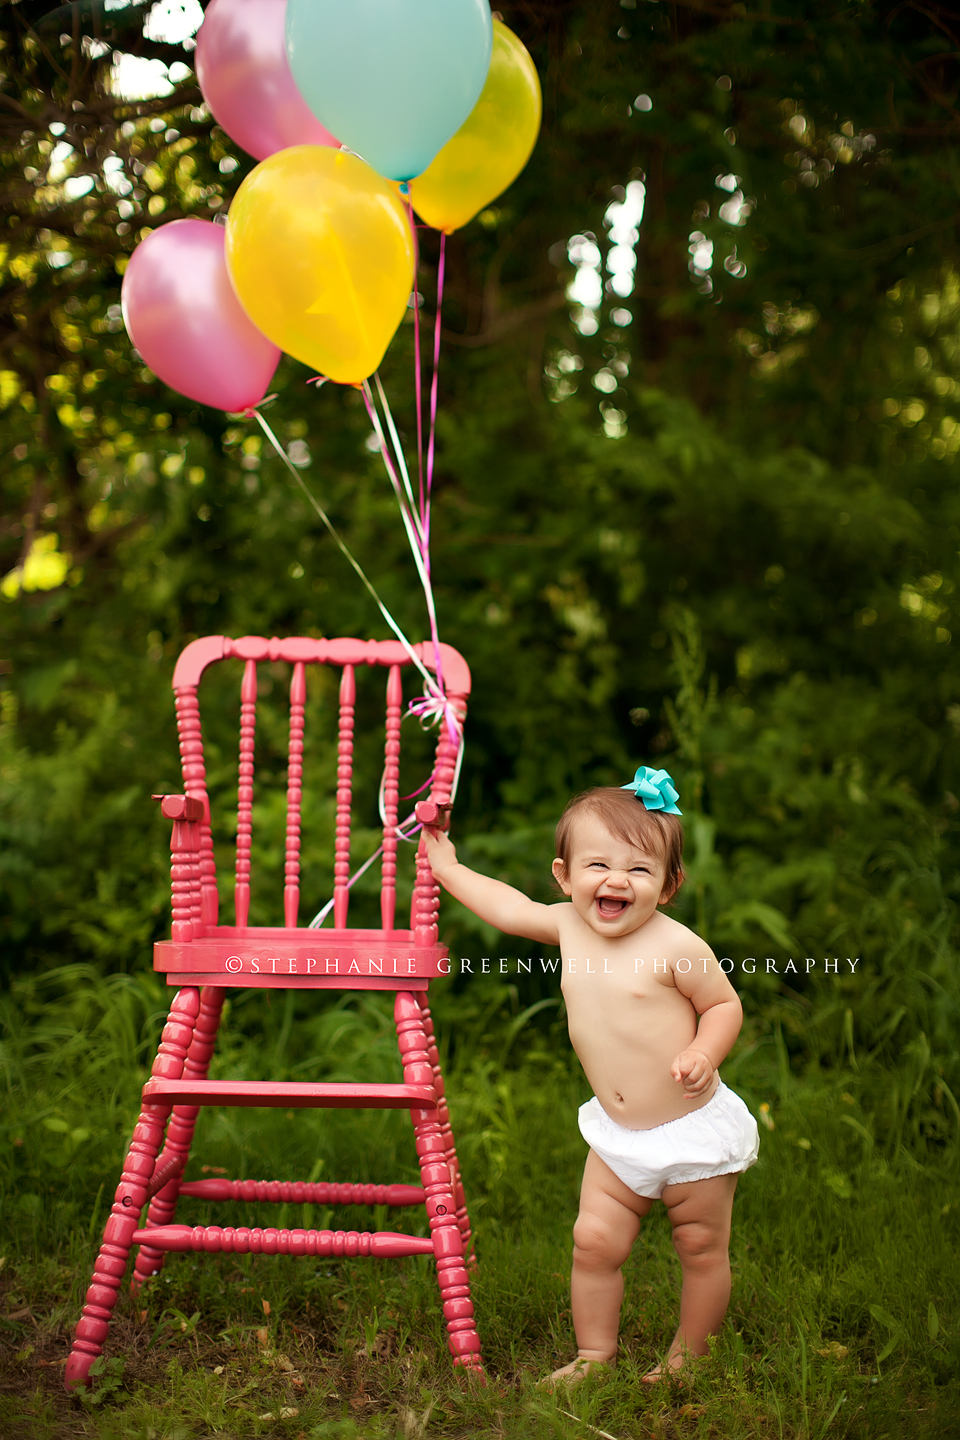 stella vanausdall baby first birthday pink high chair balloons southeast missouri photography stephanie greenwell